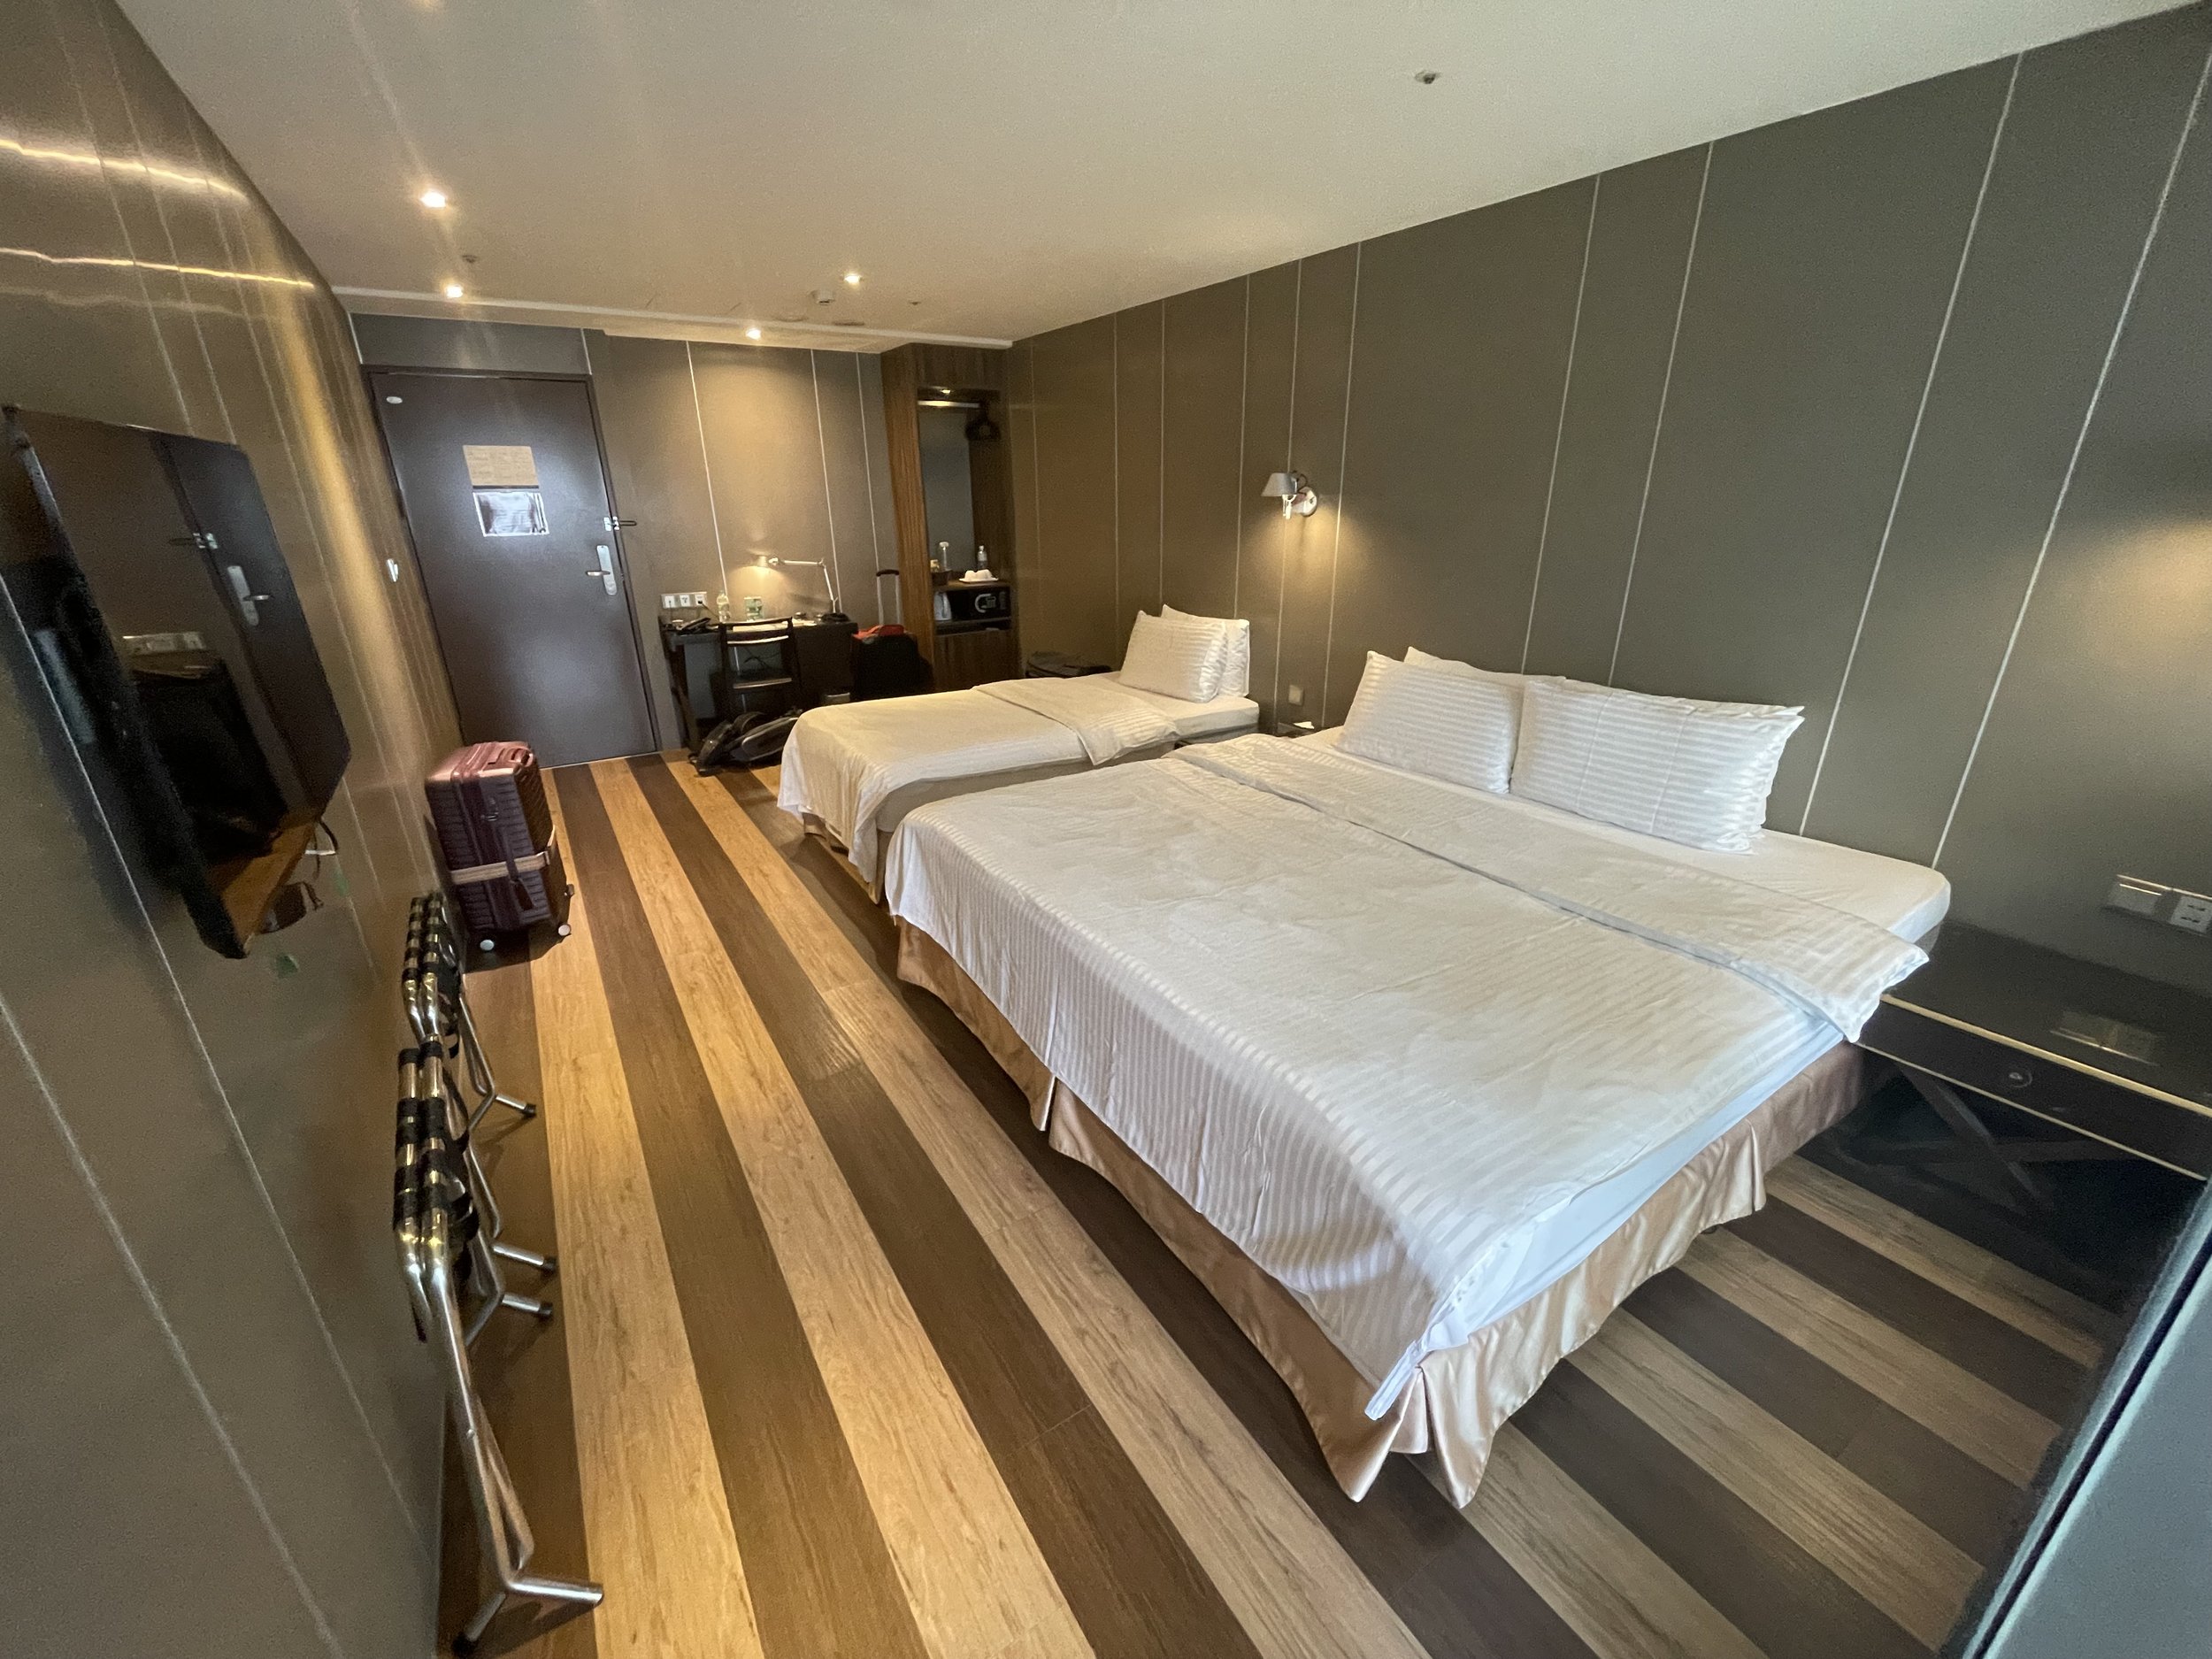 Room 1103, Hotel Relax 1, Taipei